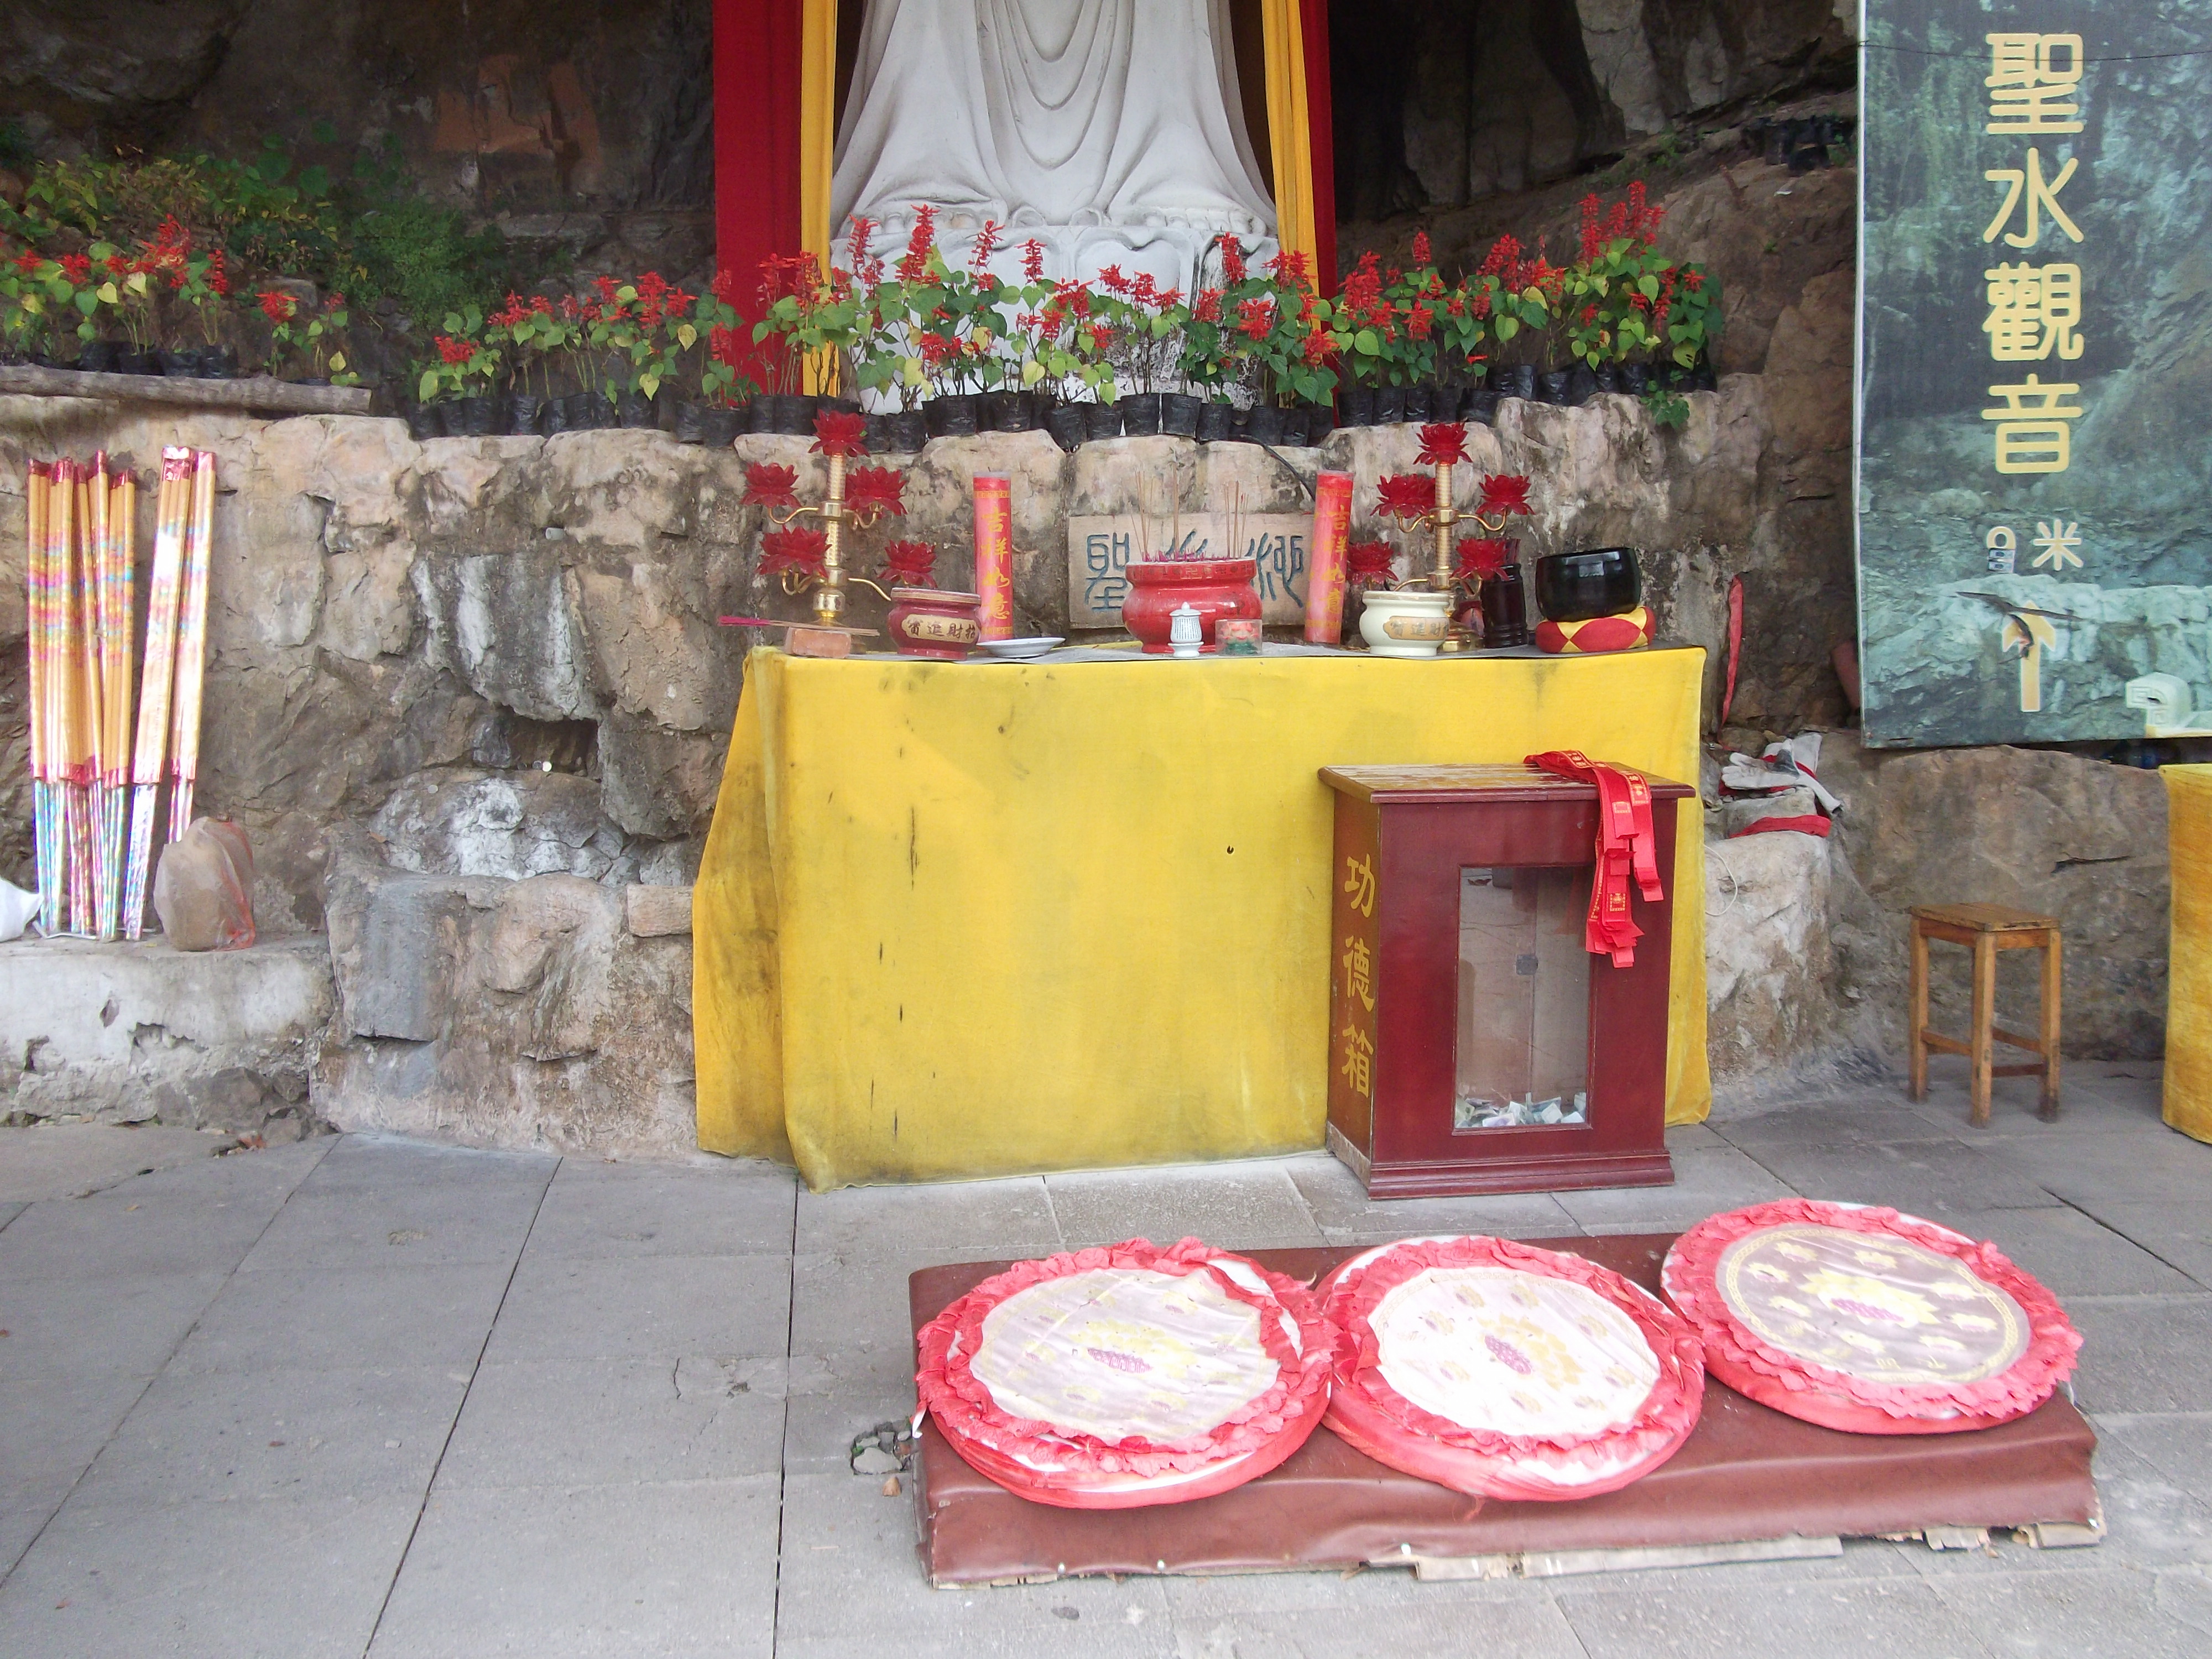 Buddhista szobor (Buddhist place)